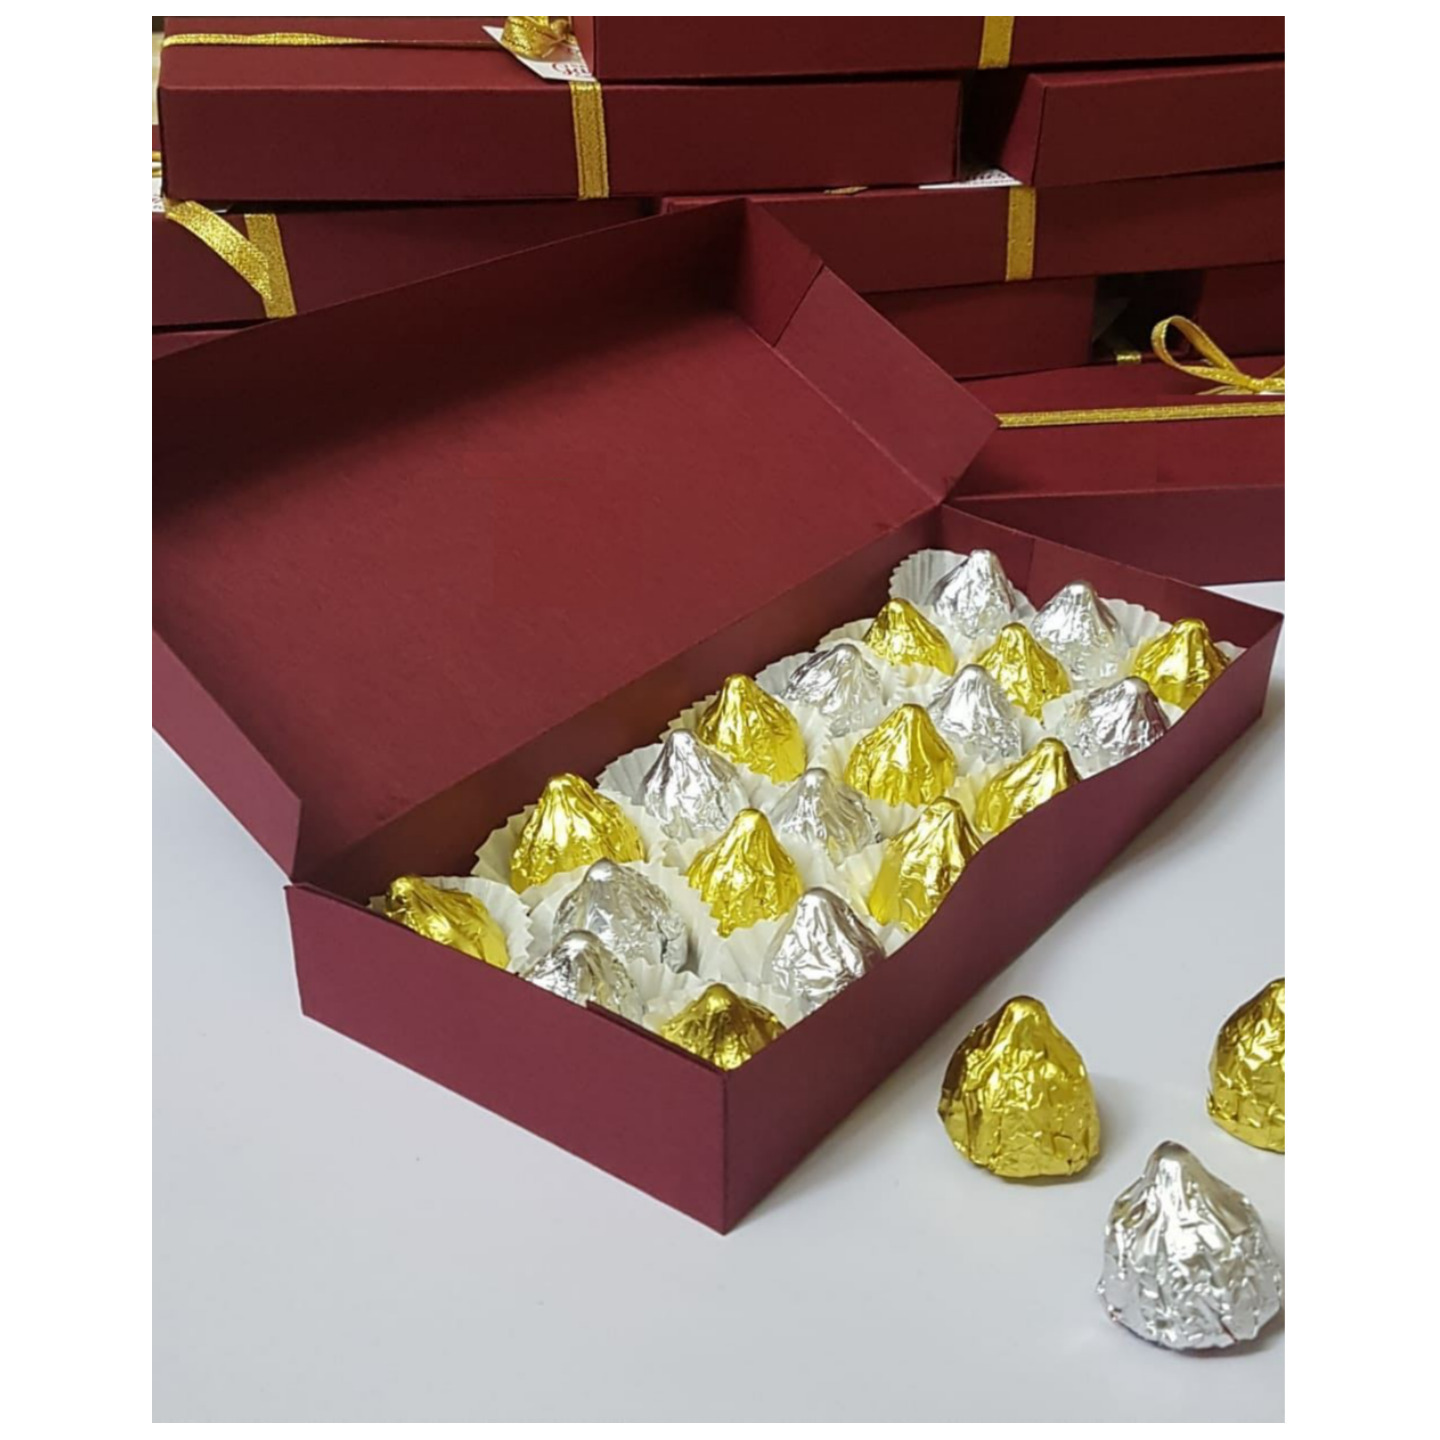 Pack of 11 Tasty Chocolate Modak Free Shipping -Enjoy your festive season 